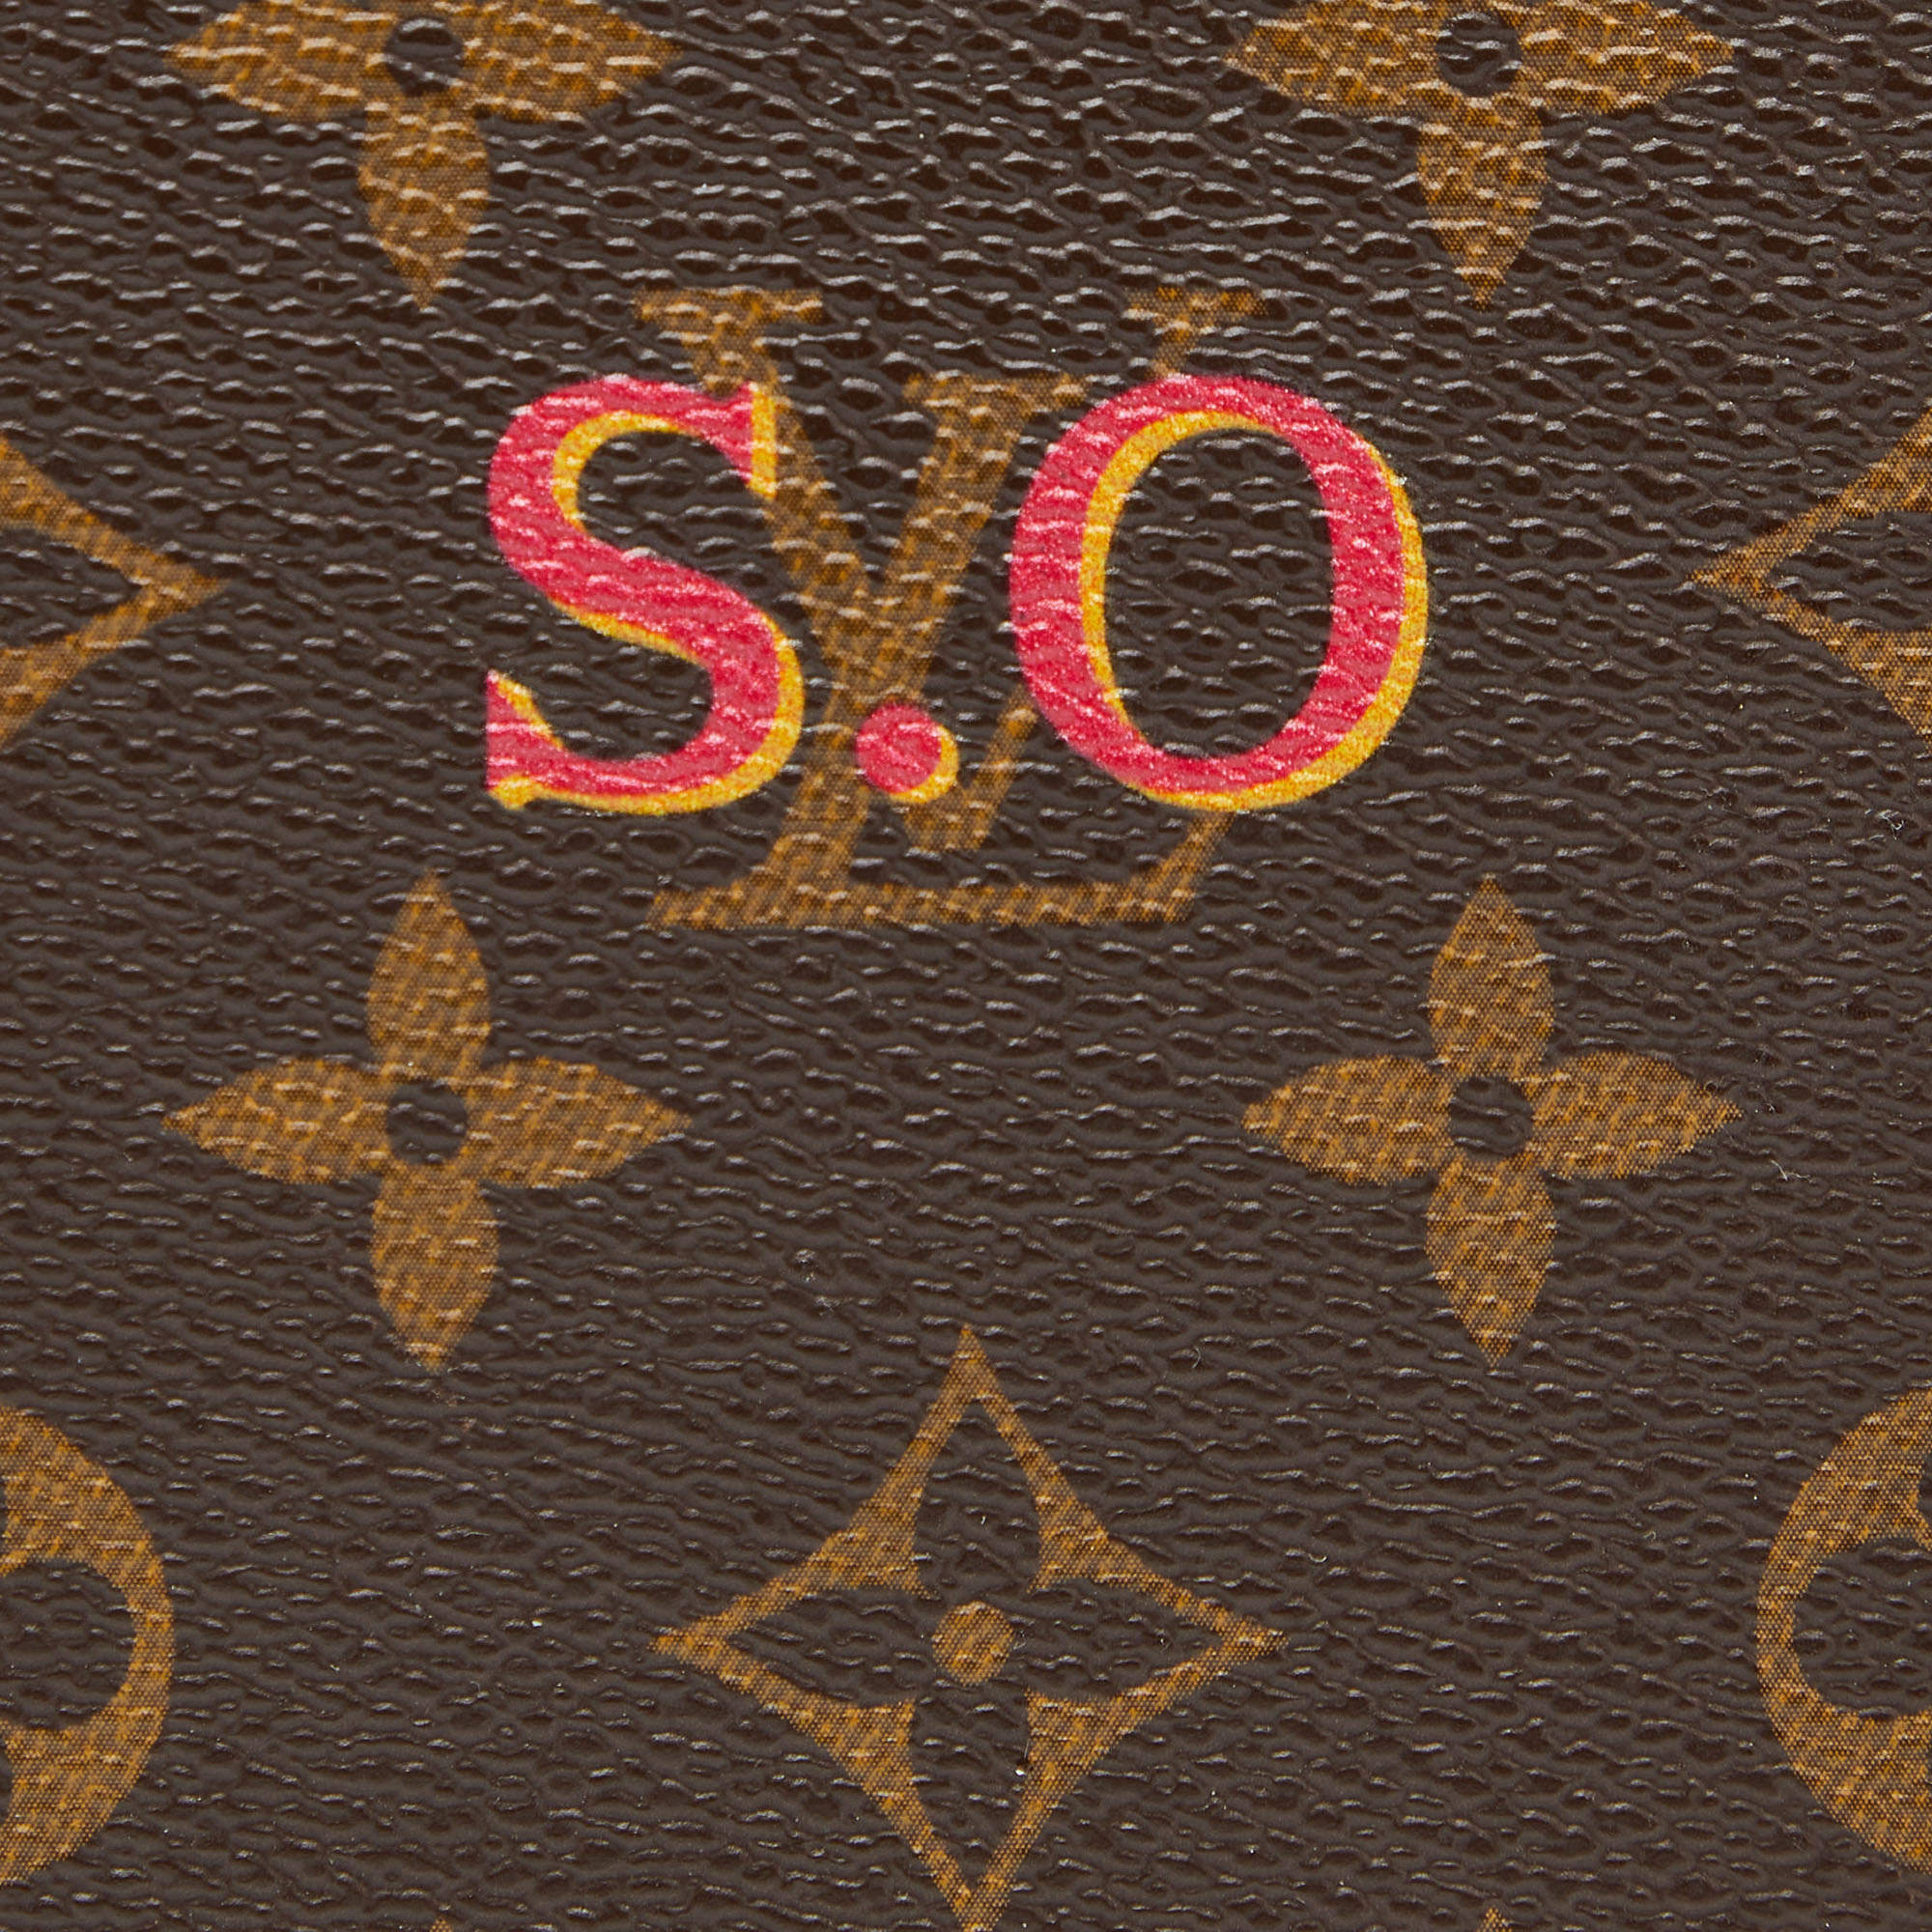 Louis Vuitton Heritage Passport Cover Sp4111